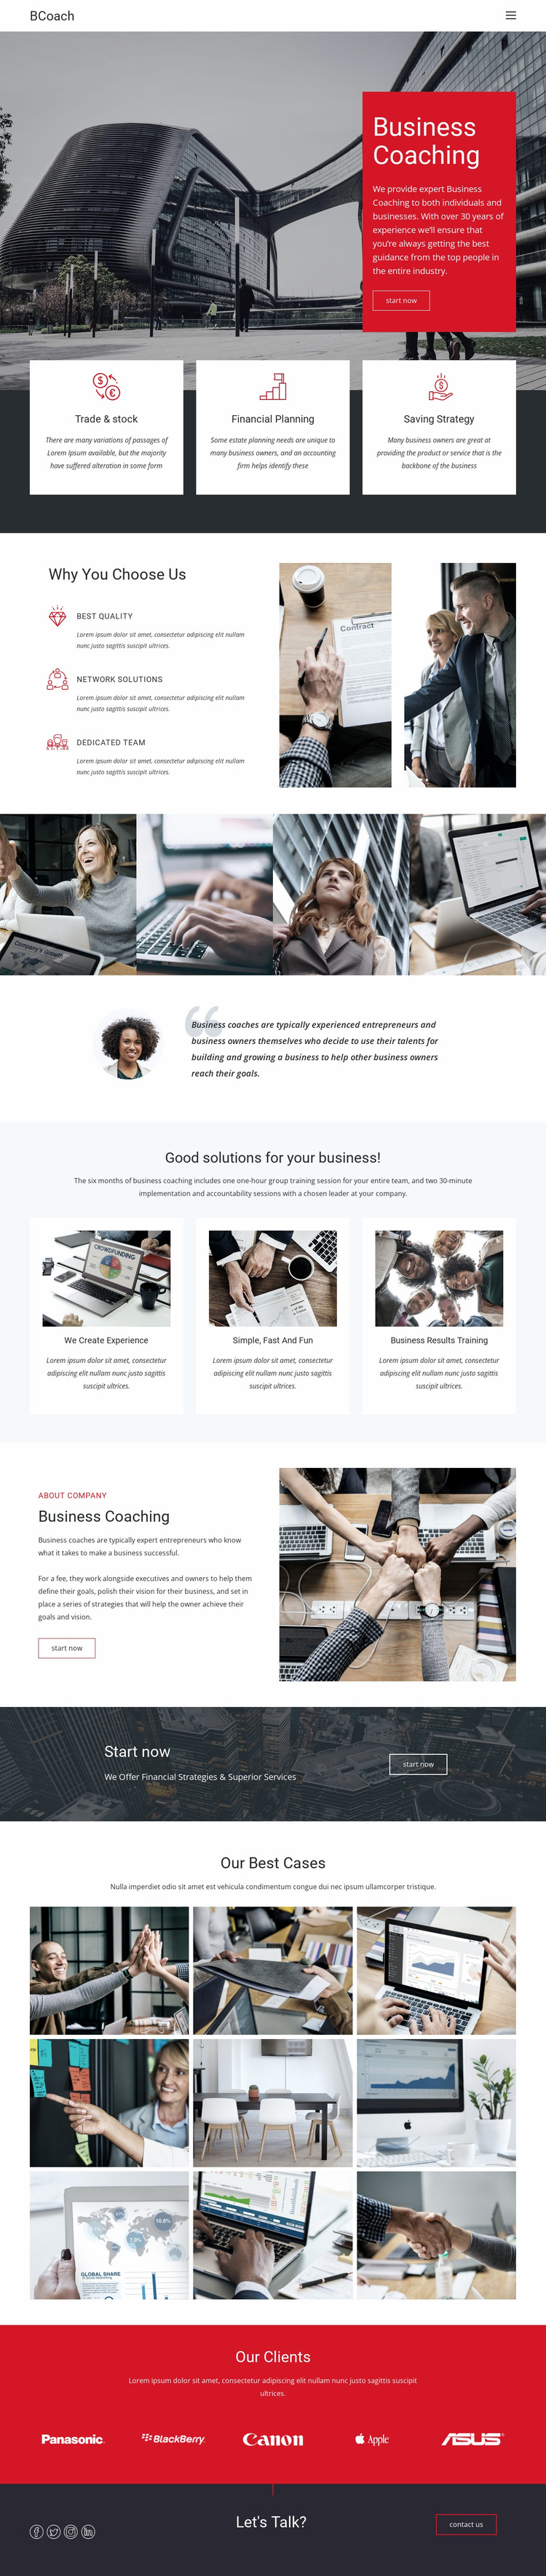 Executive coaching Website Design